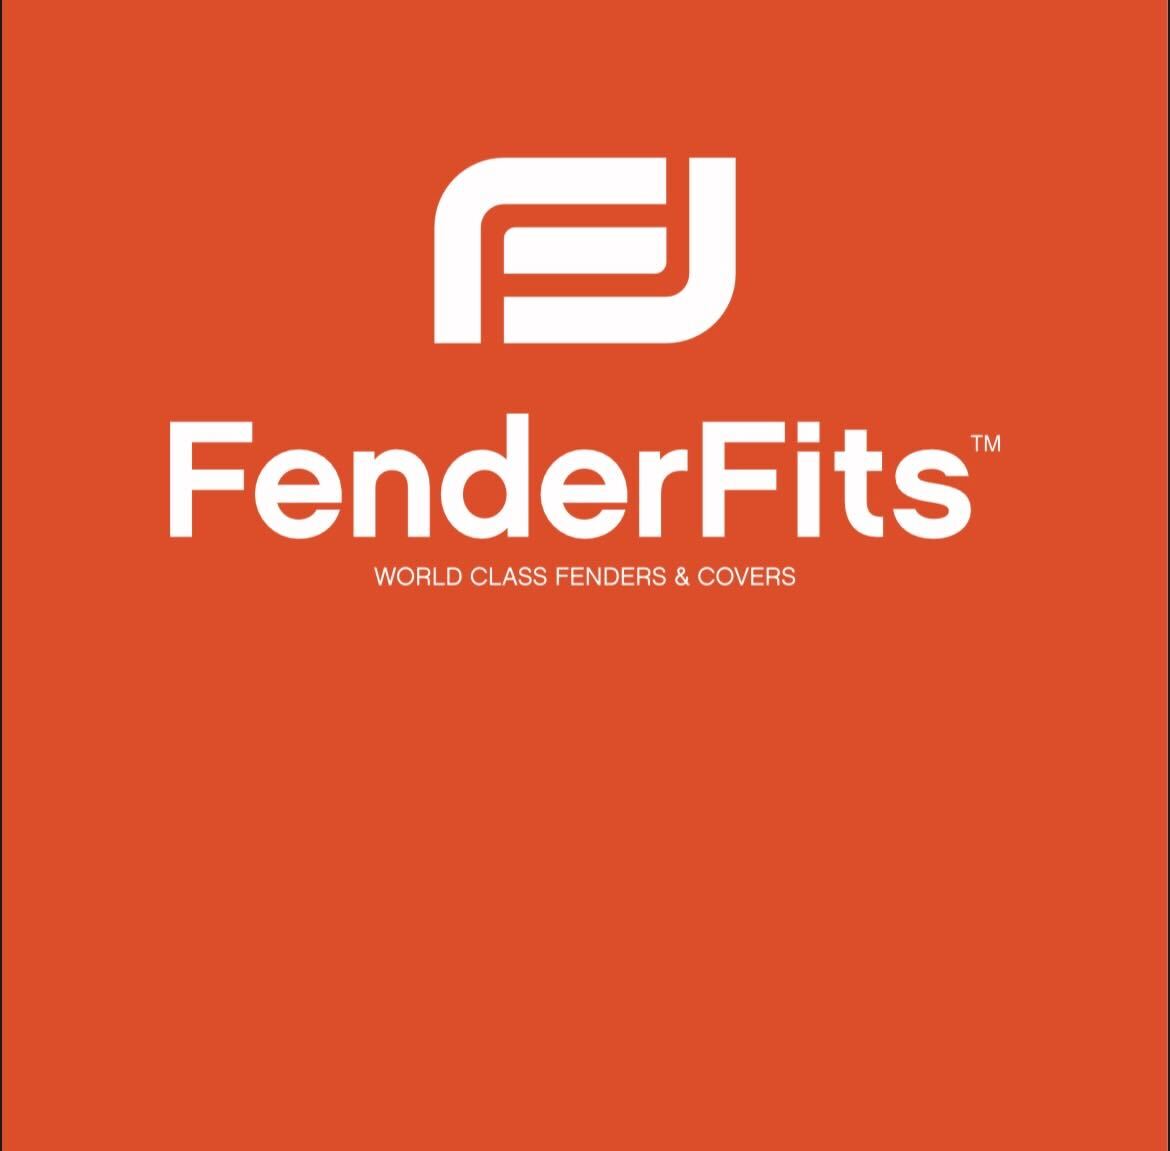 fenderfits-logo